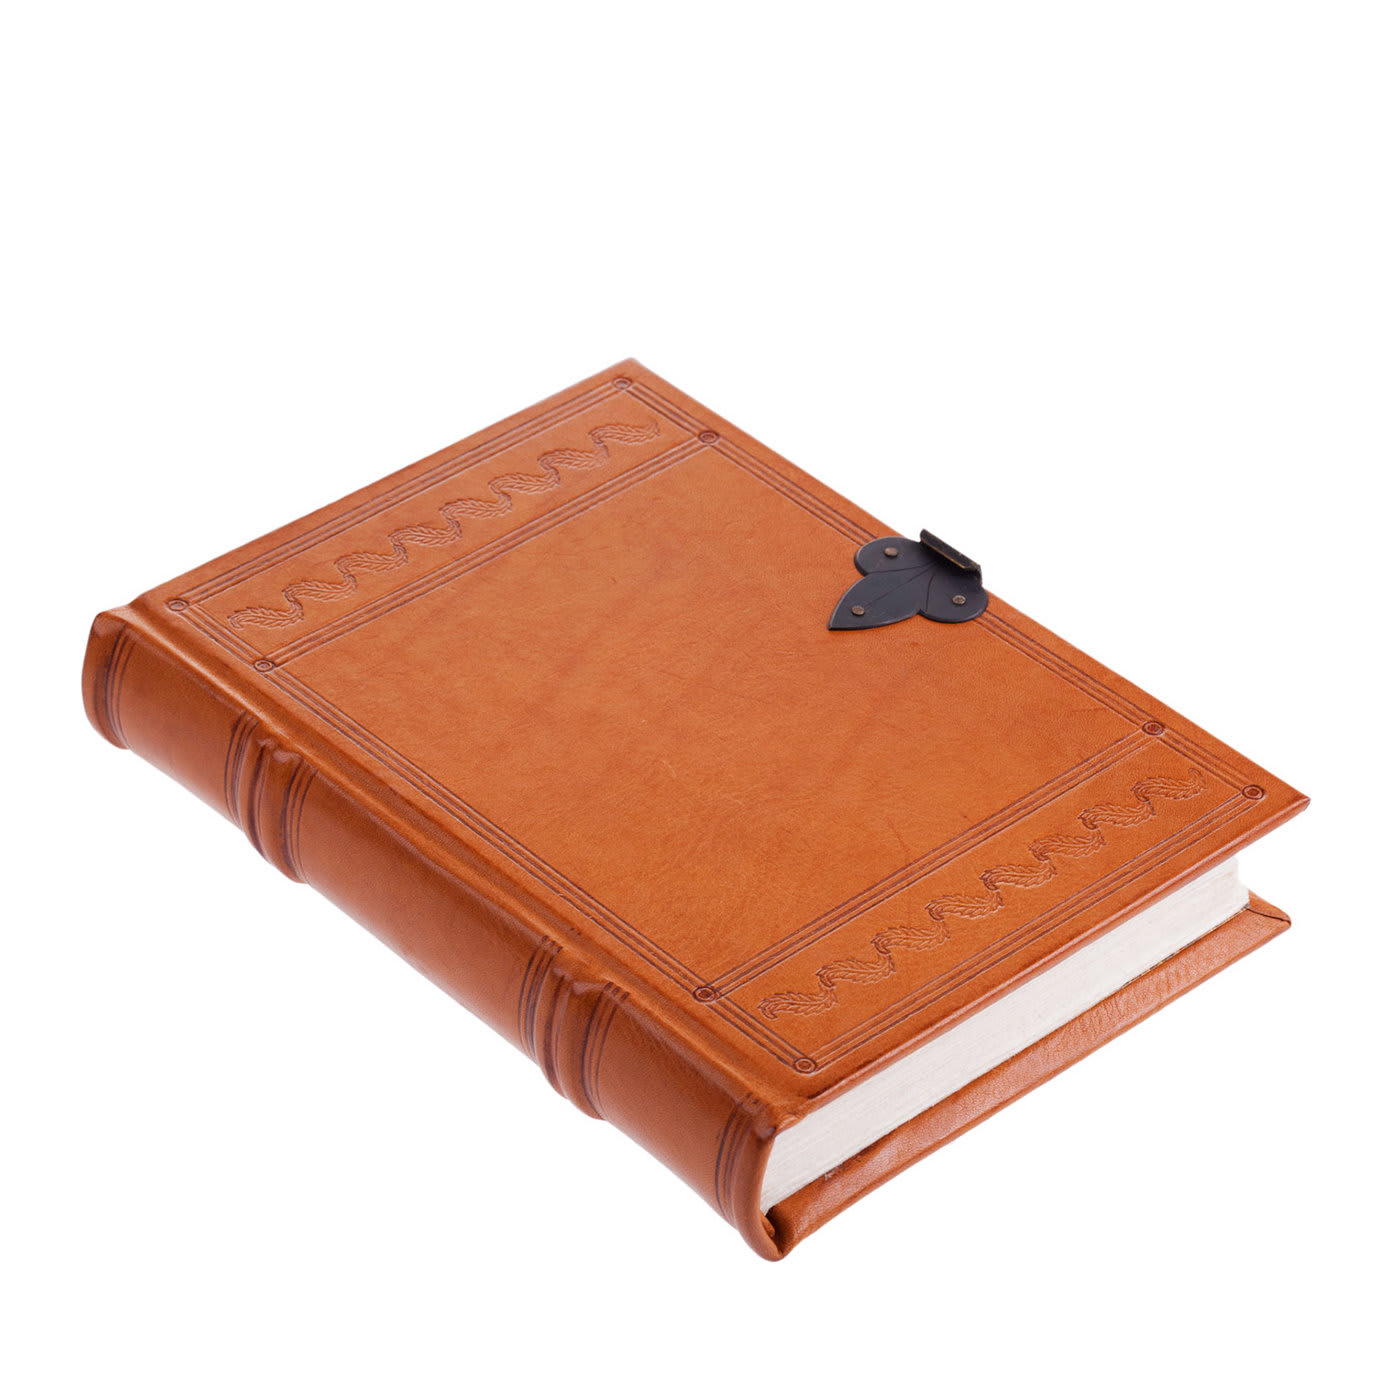 Monastico Storia Leather Book - Giannini